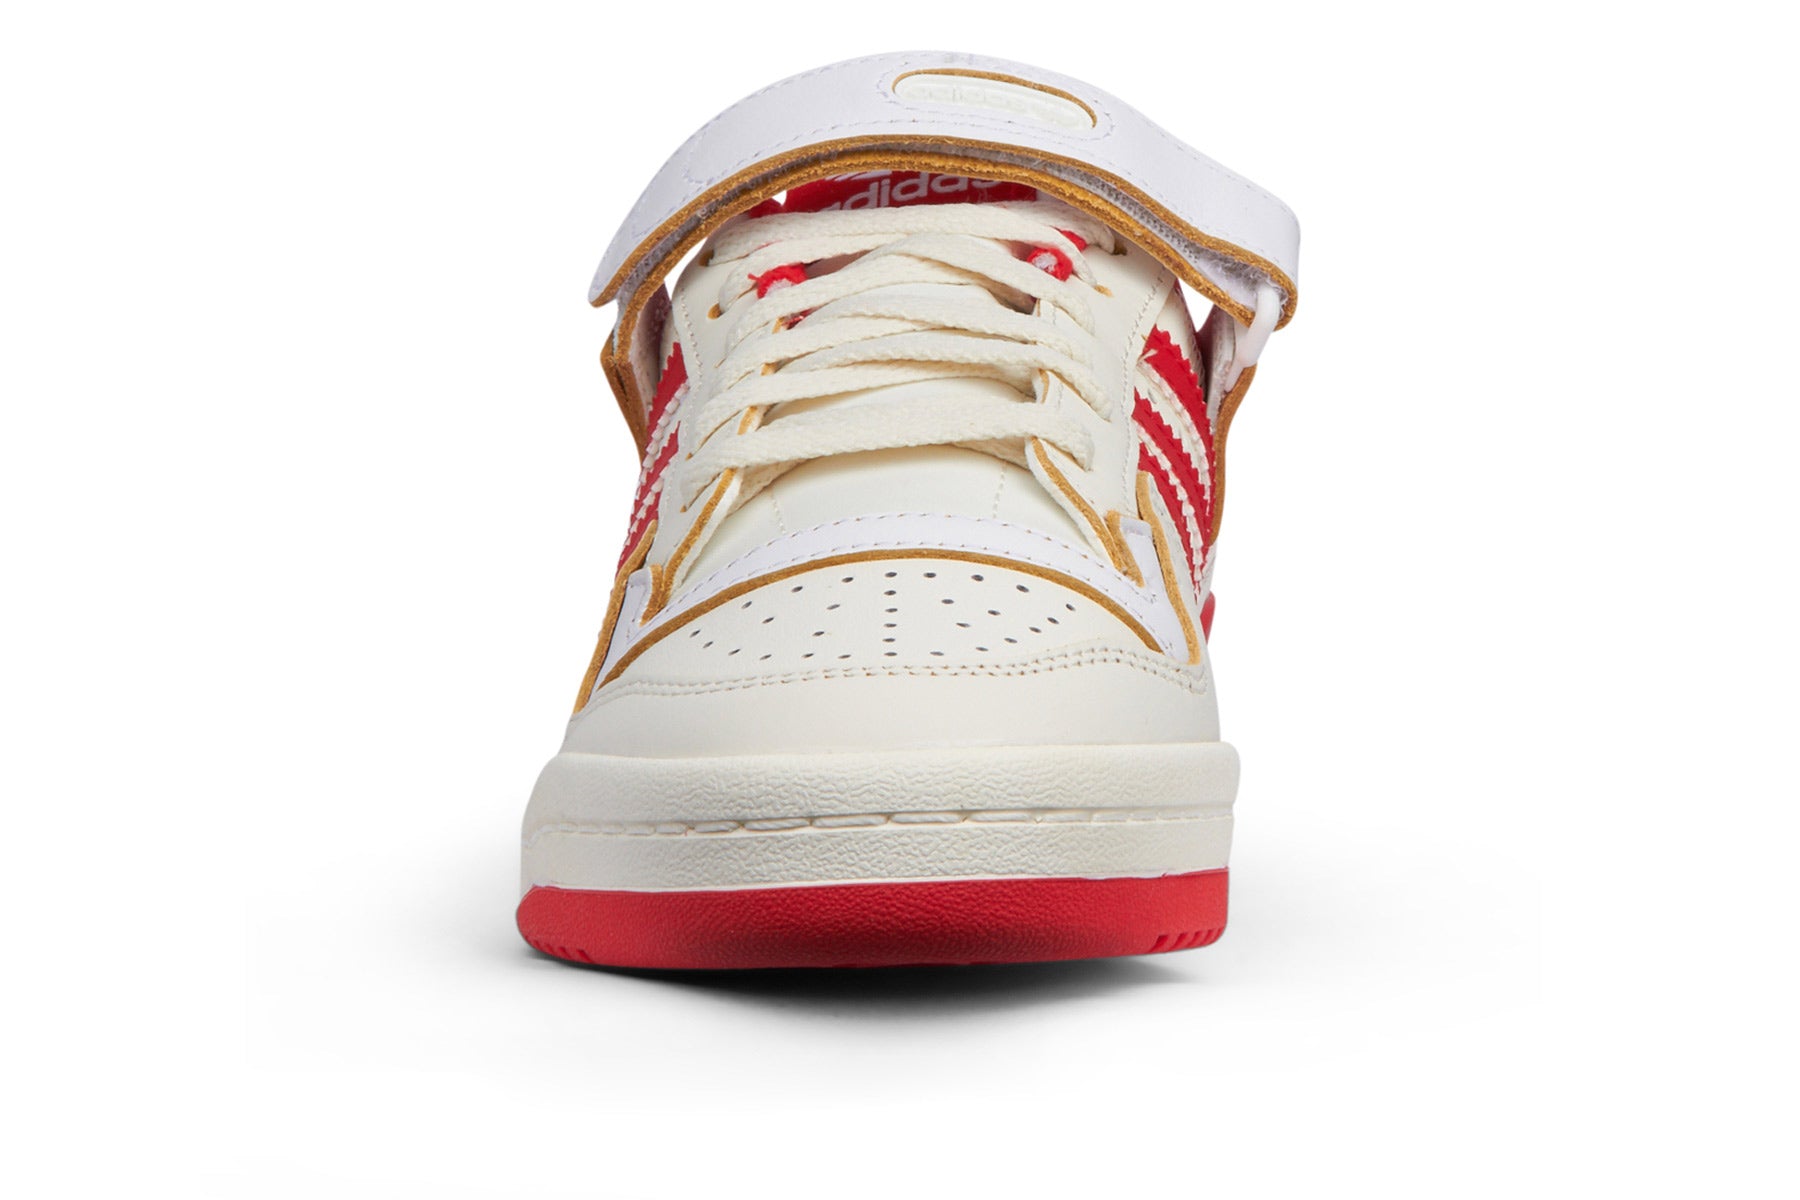 Adidas Forum 84 Low - Off White/Vivid Red/FTWR White